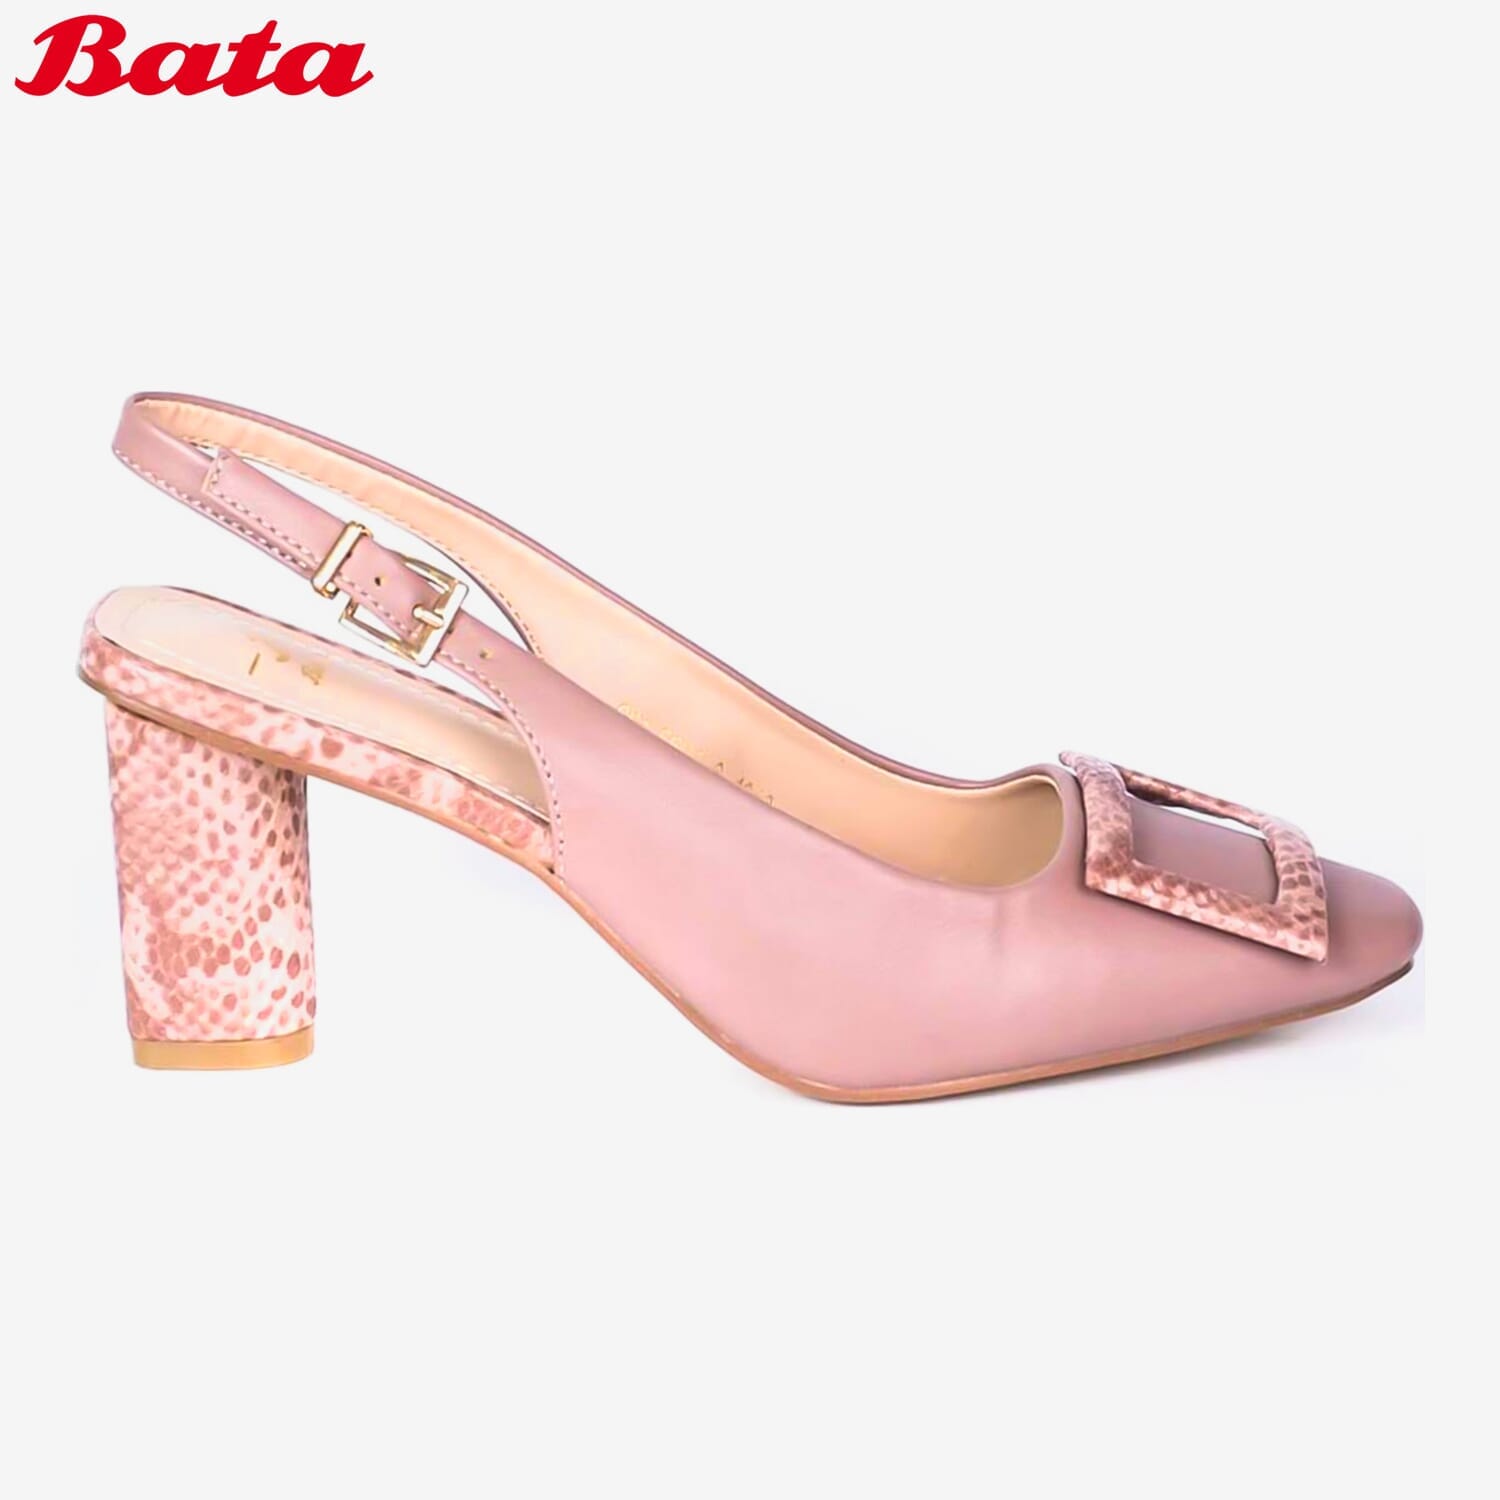 BATA Shoes for Women - Vestiaire Collective